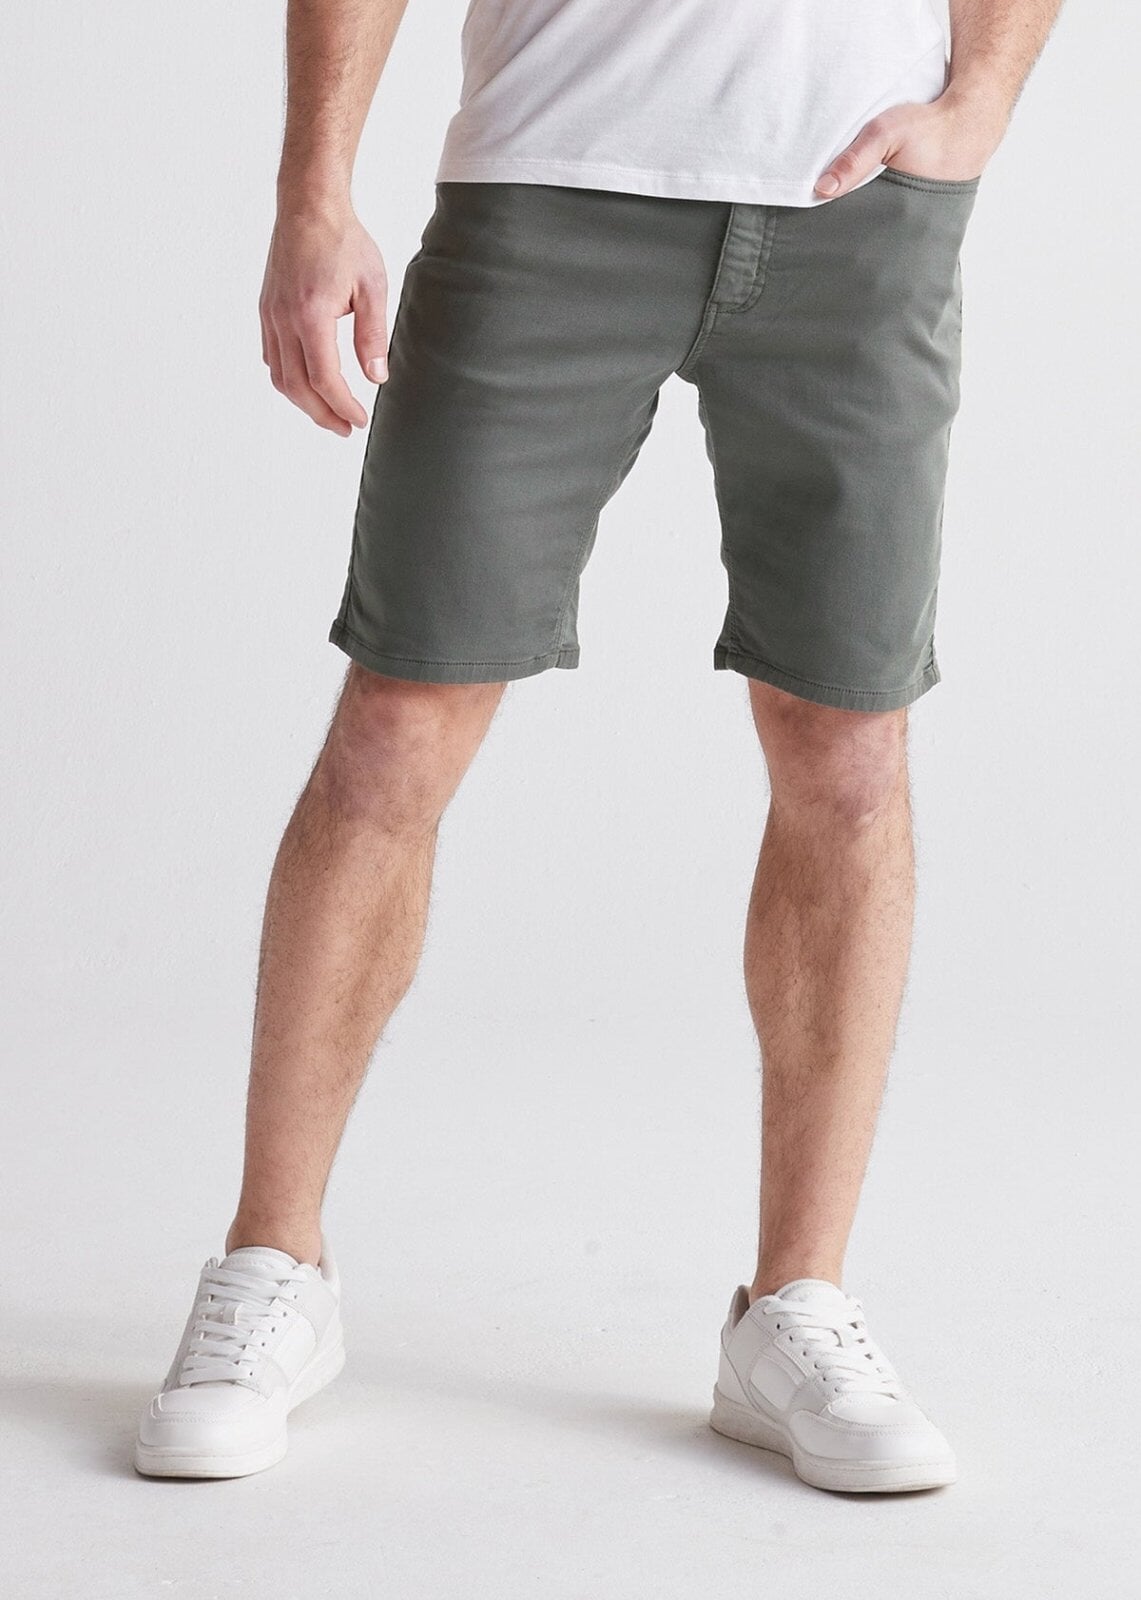 Men's Grey Slim Fit Stretch Short Front